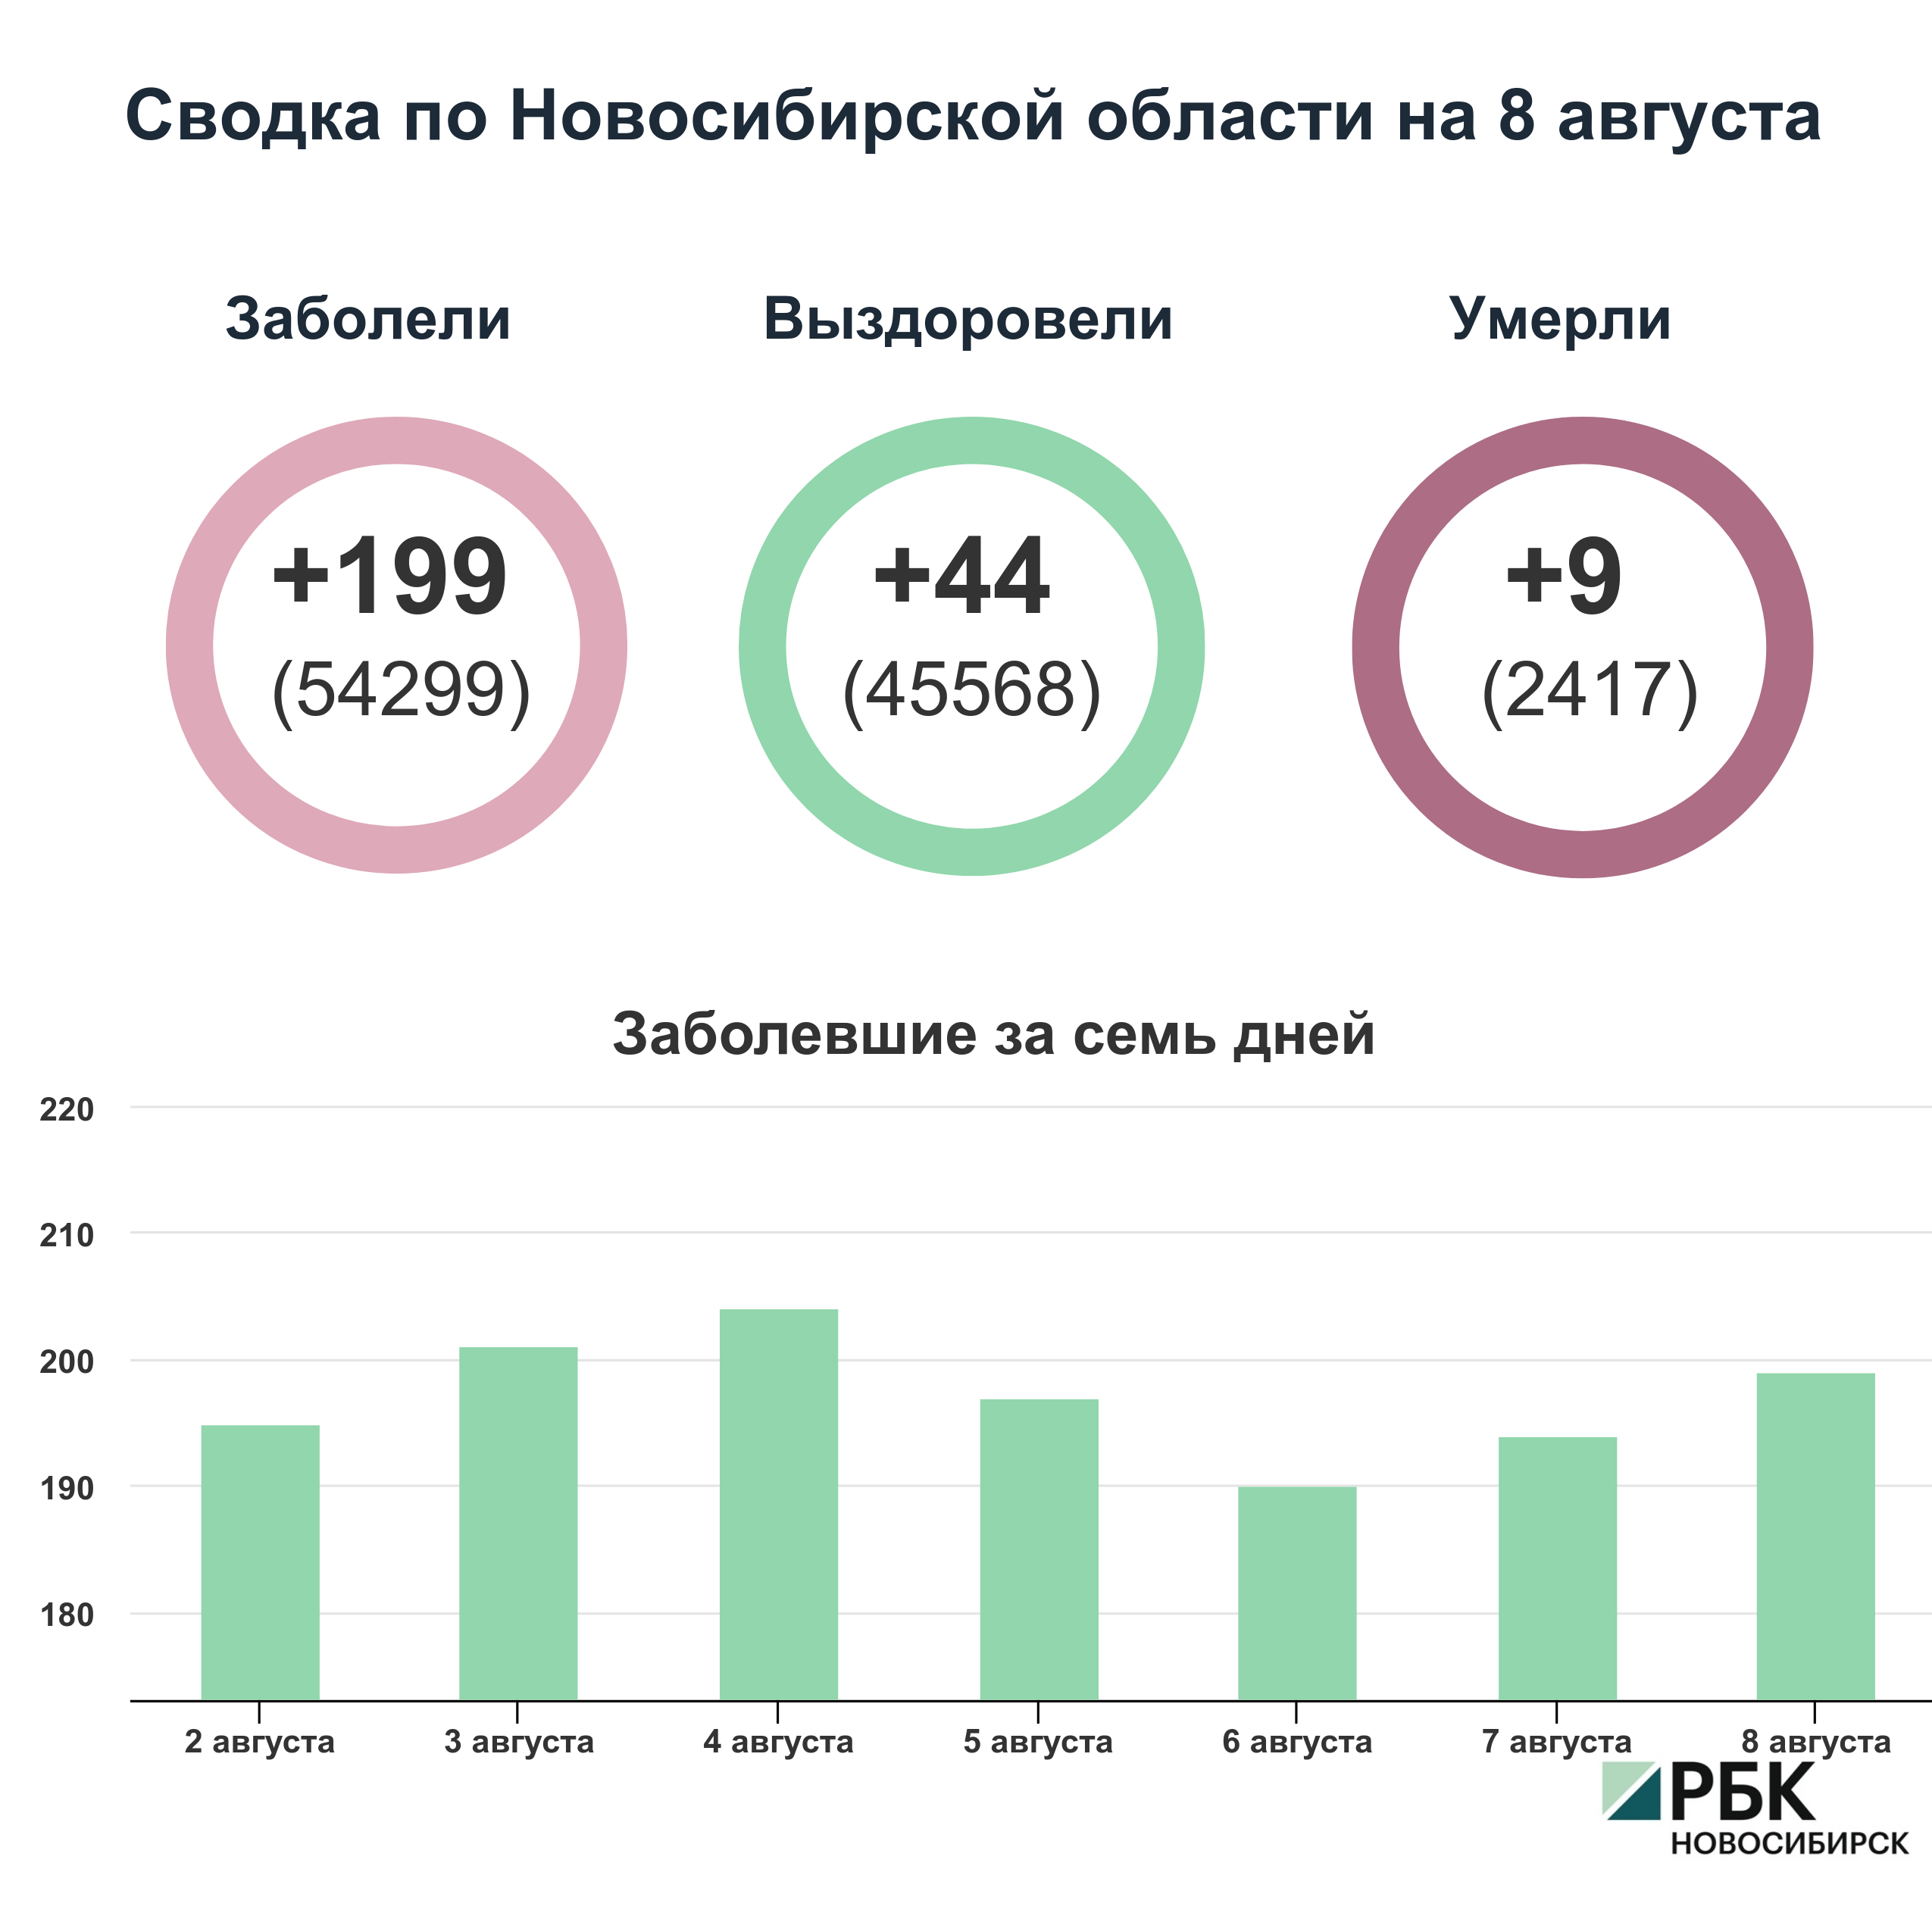 Коронавирус в Новосибирске: сводка на 8 августа